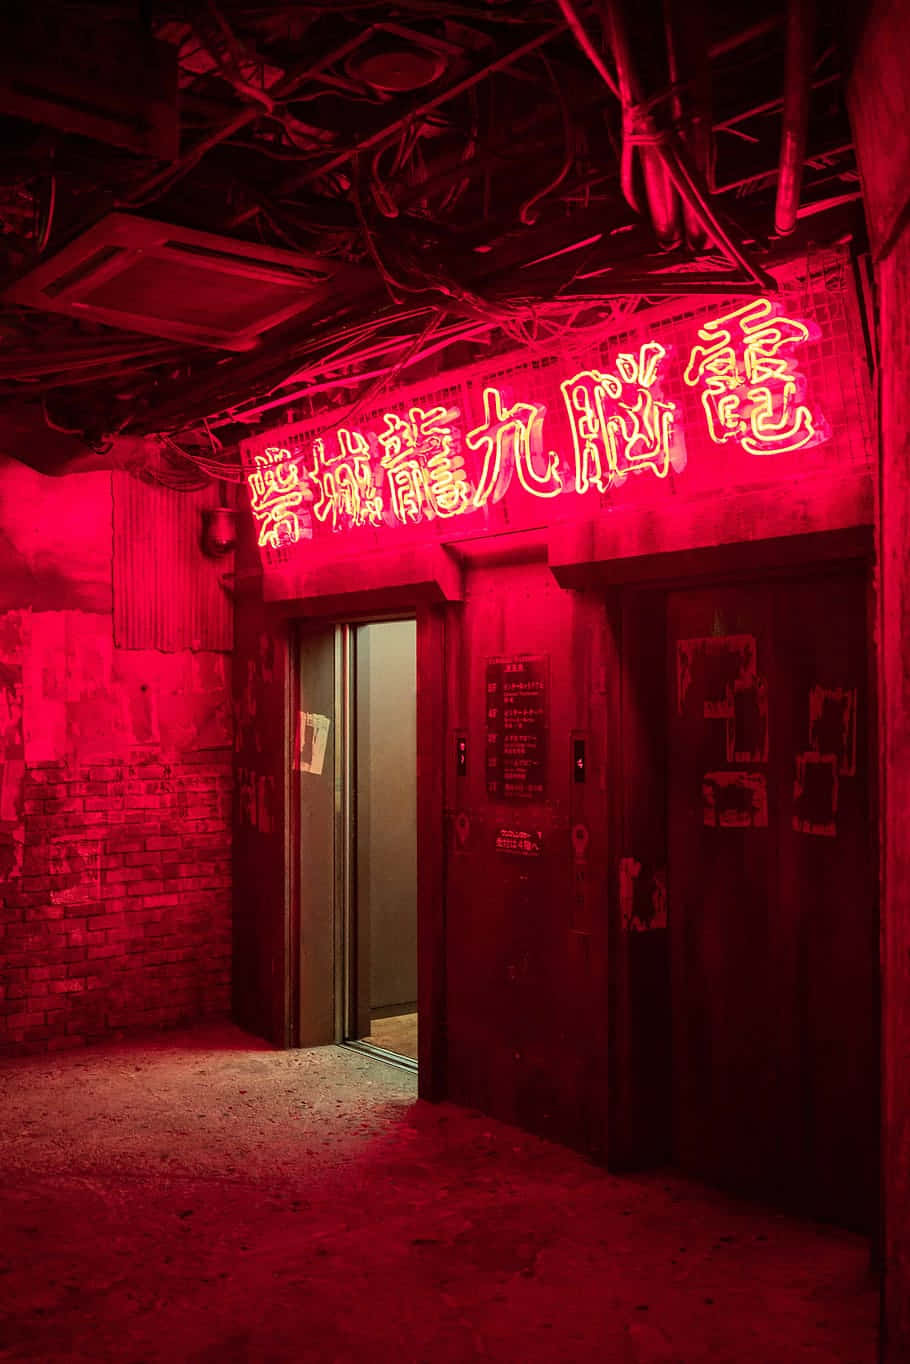 Aesthetic Grunge Neon Sign lighting up the night. Wallpaper